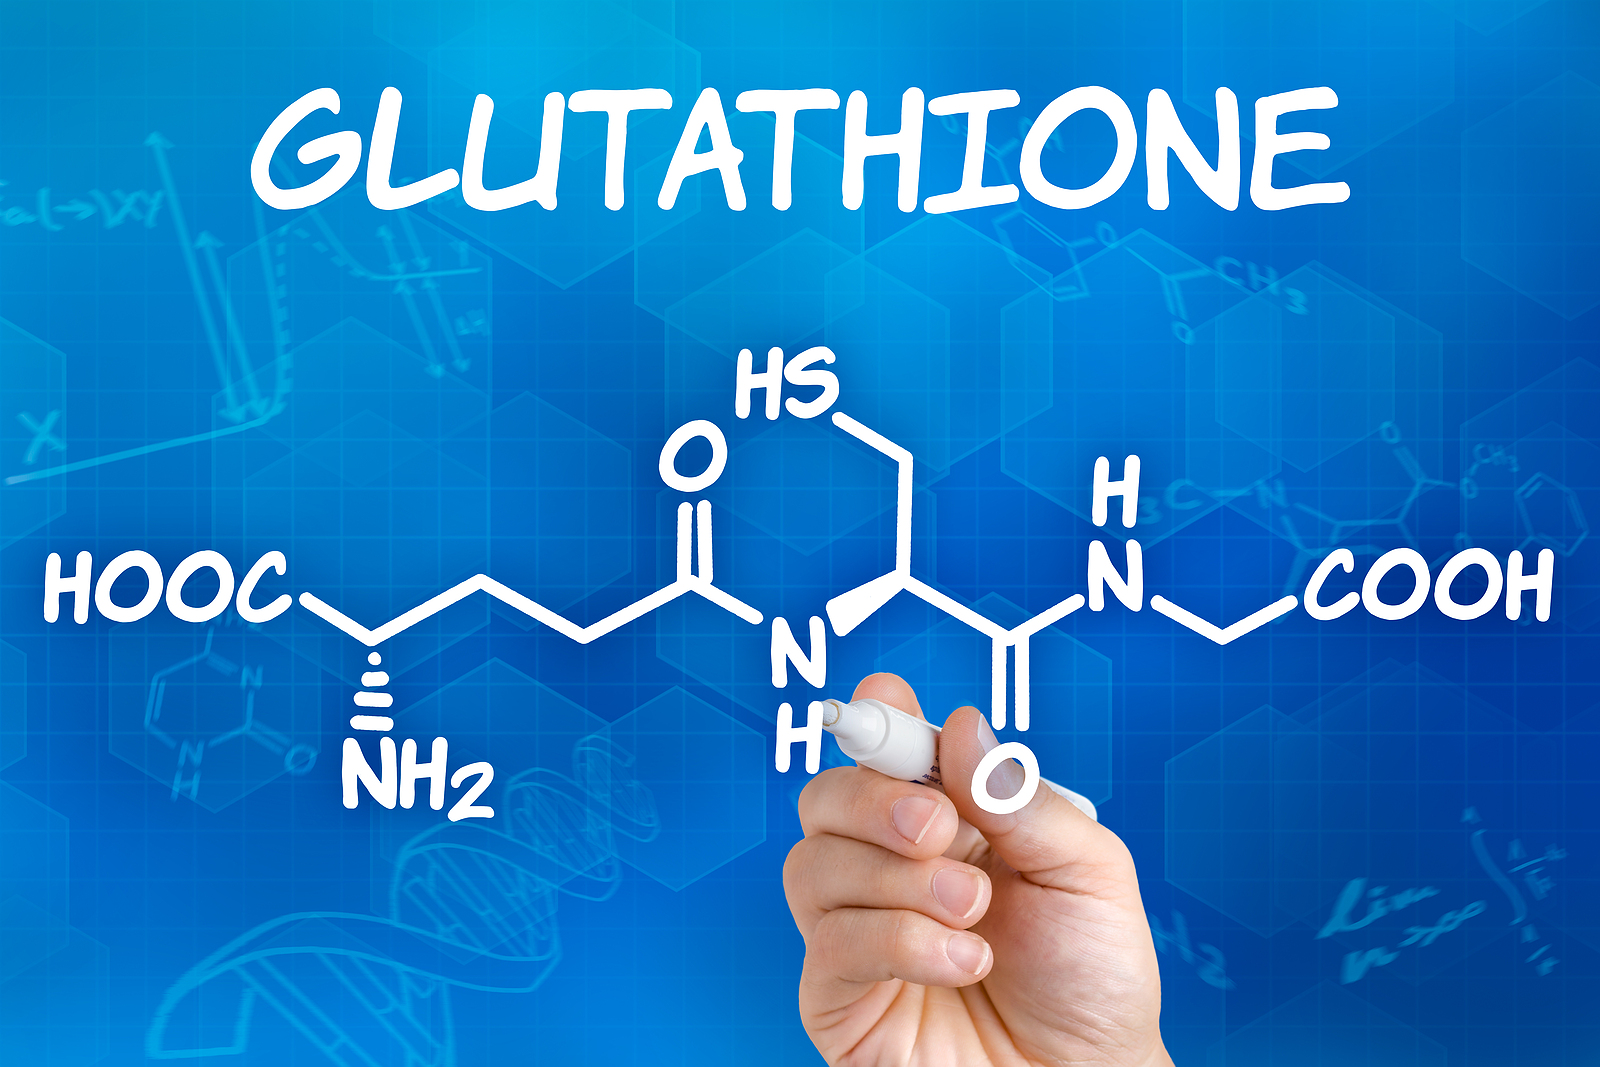 Glutathione: Your Body’s Most Powerful Antioxidant